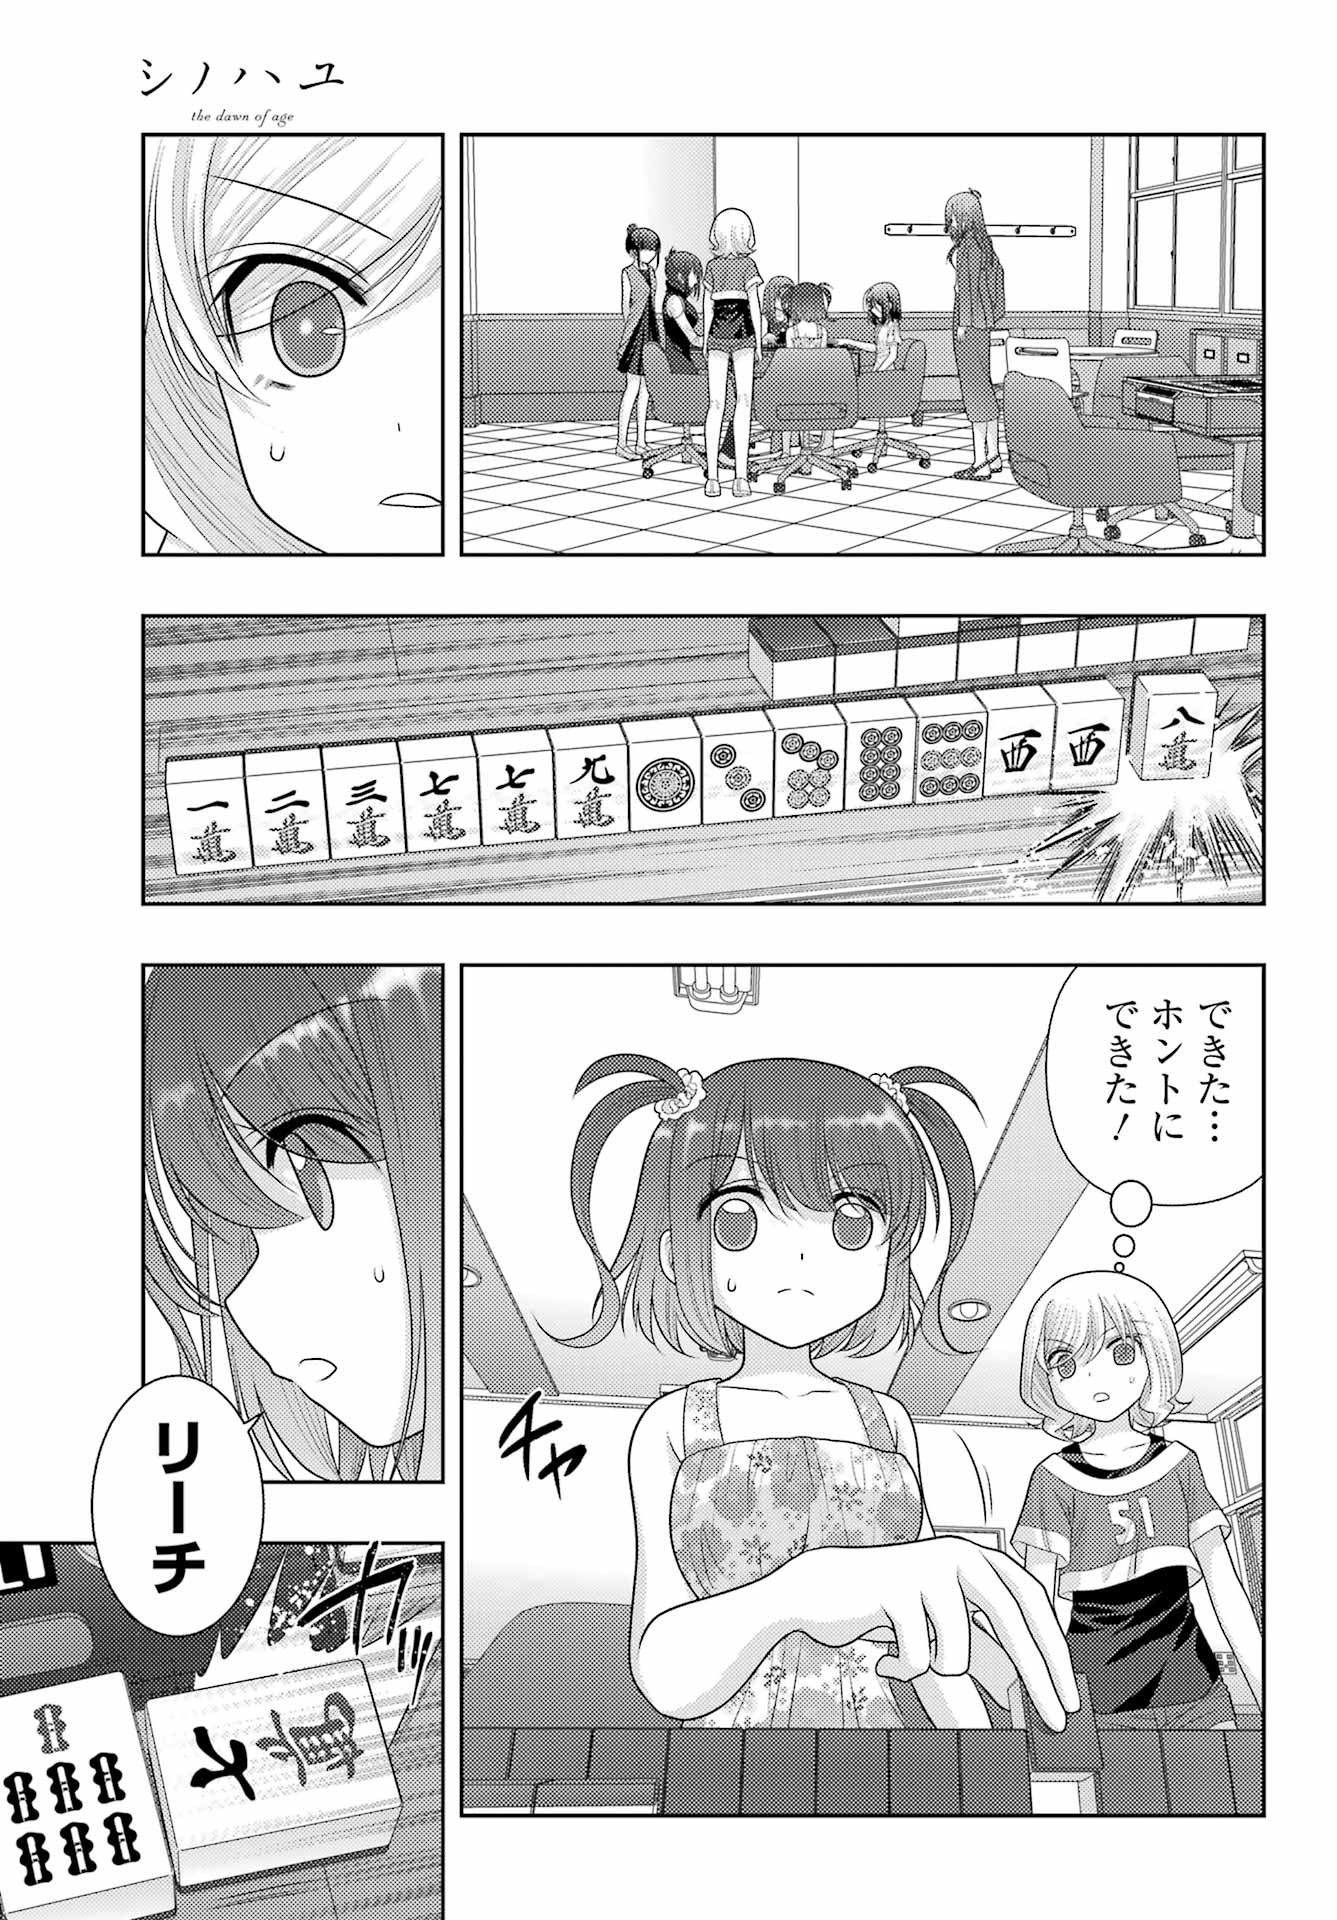 Shinohayu - The Dawn of Age Manga - Chapter 104 - Page 3